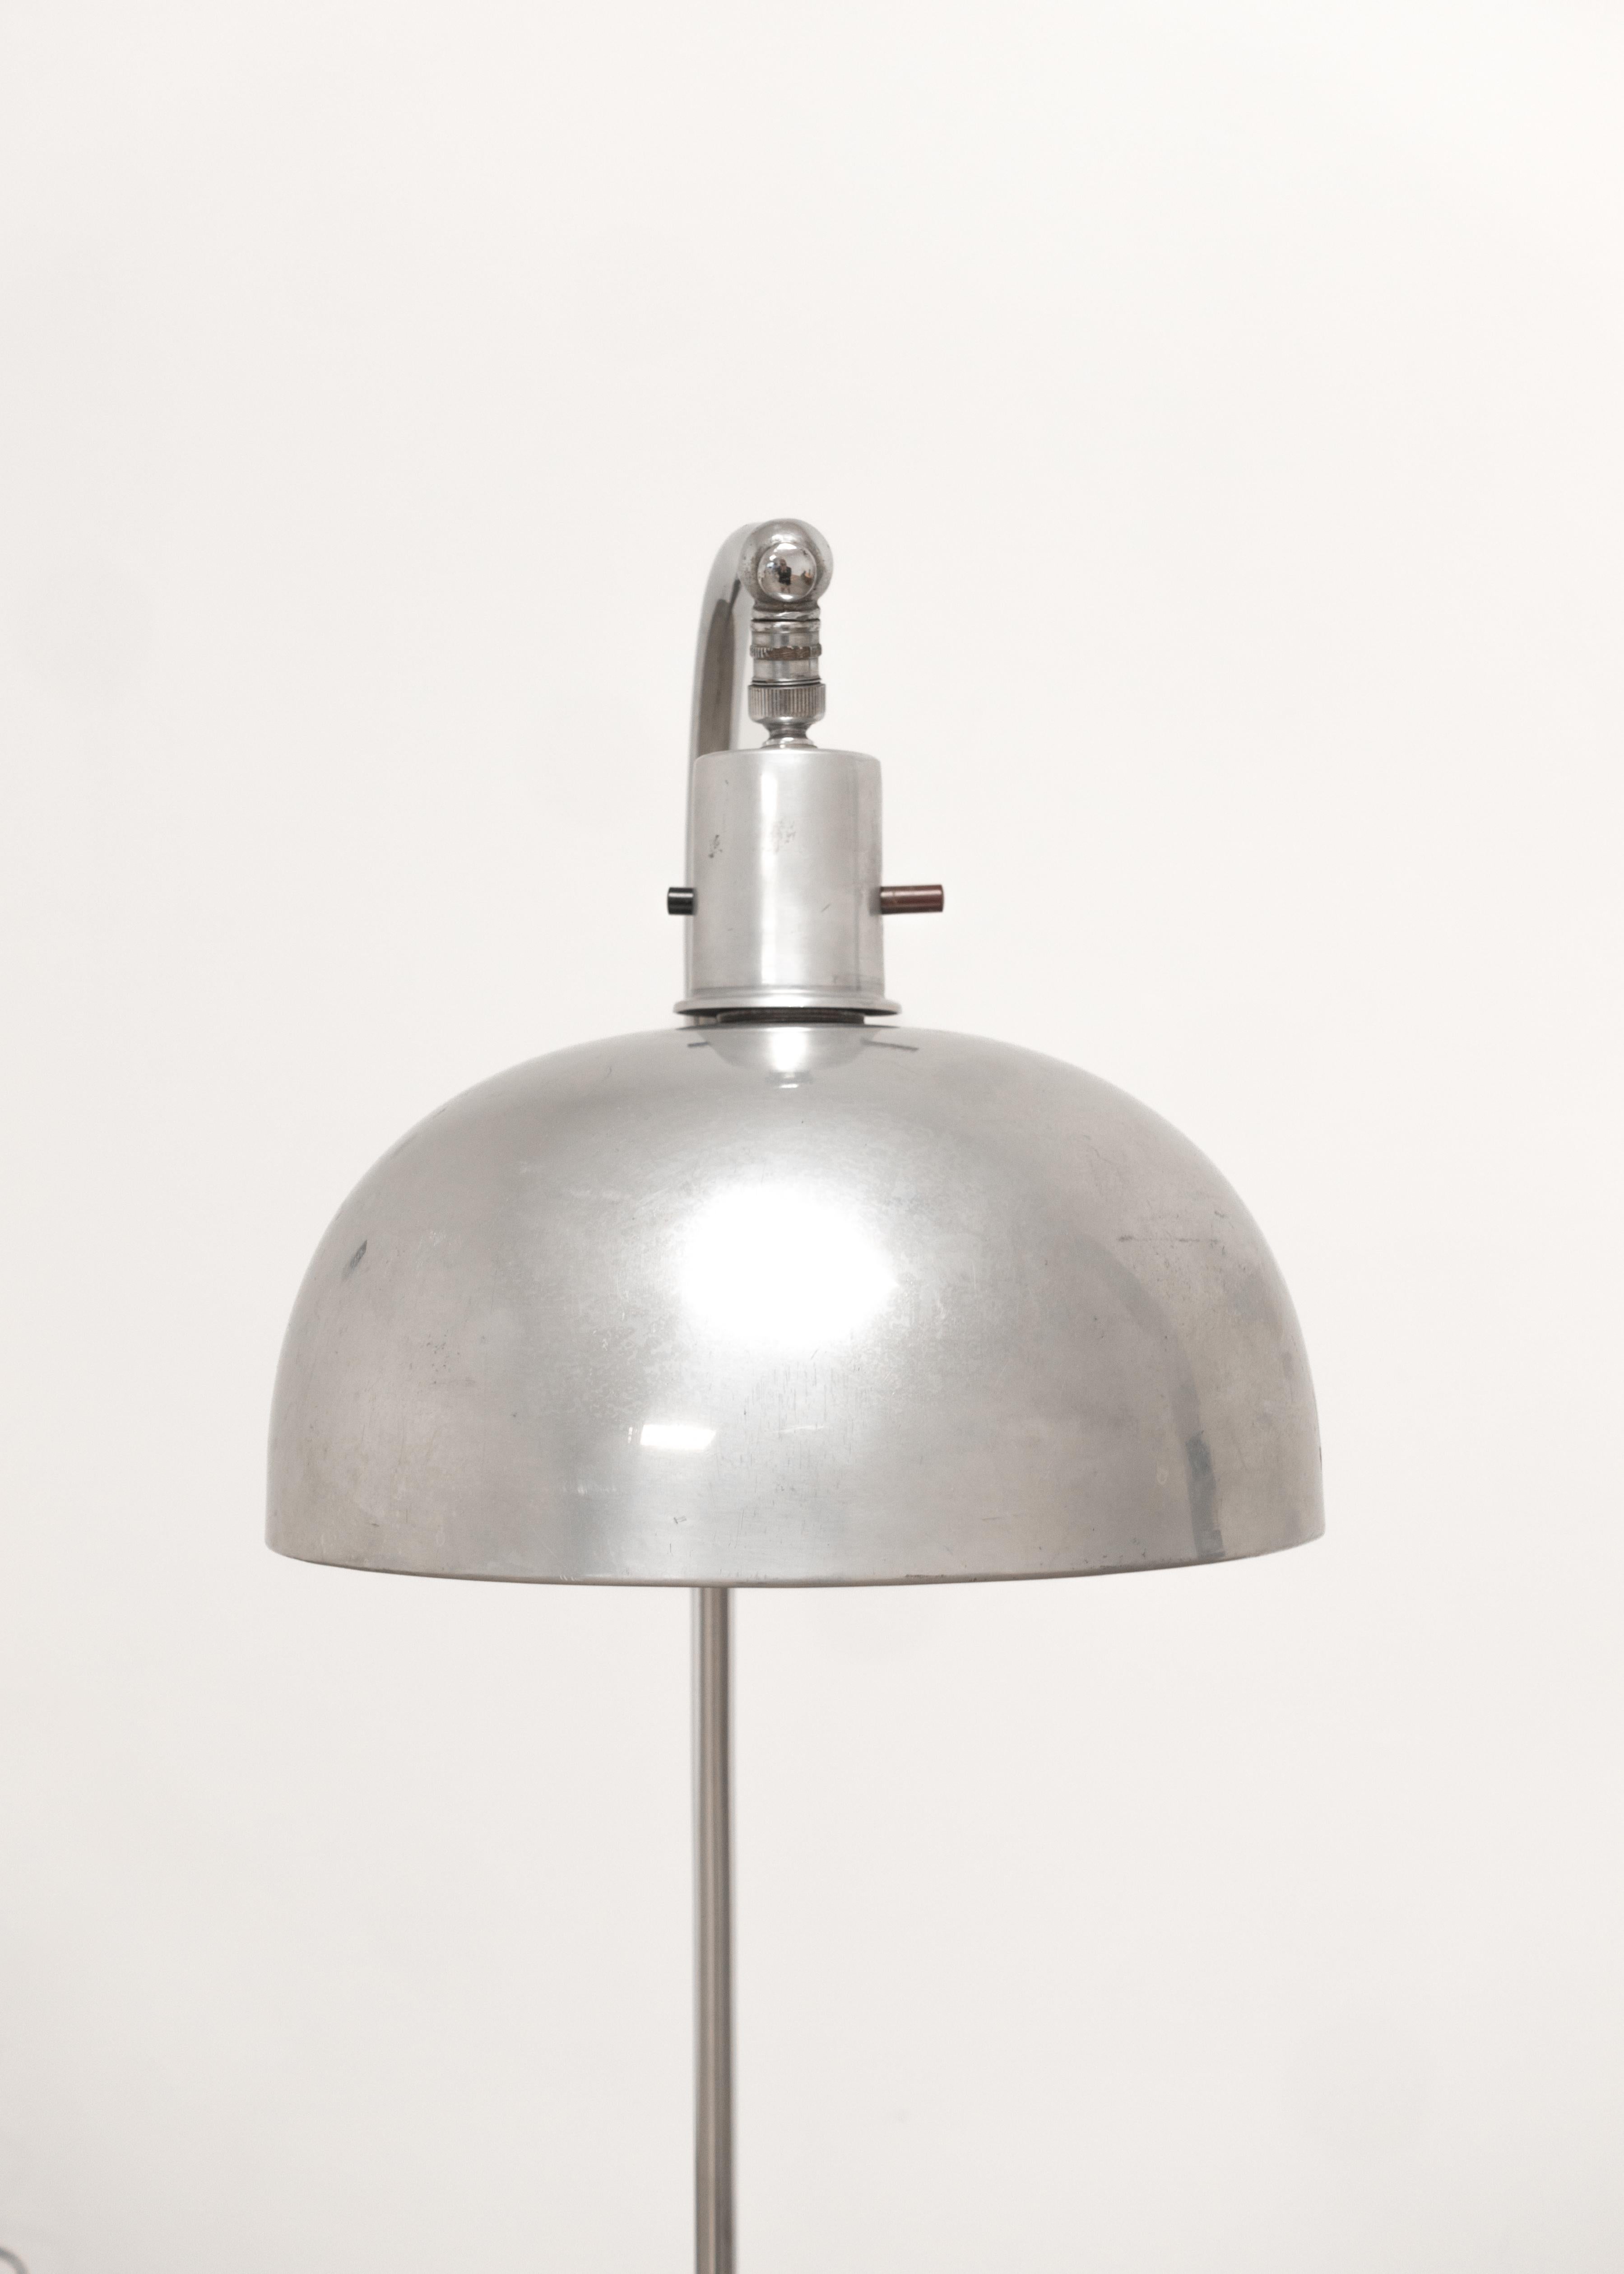 Gilbert Rohde Rare lampadaire par Mutual-Sunset Lamp Manufacturing Company
